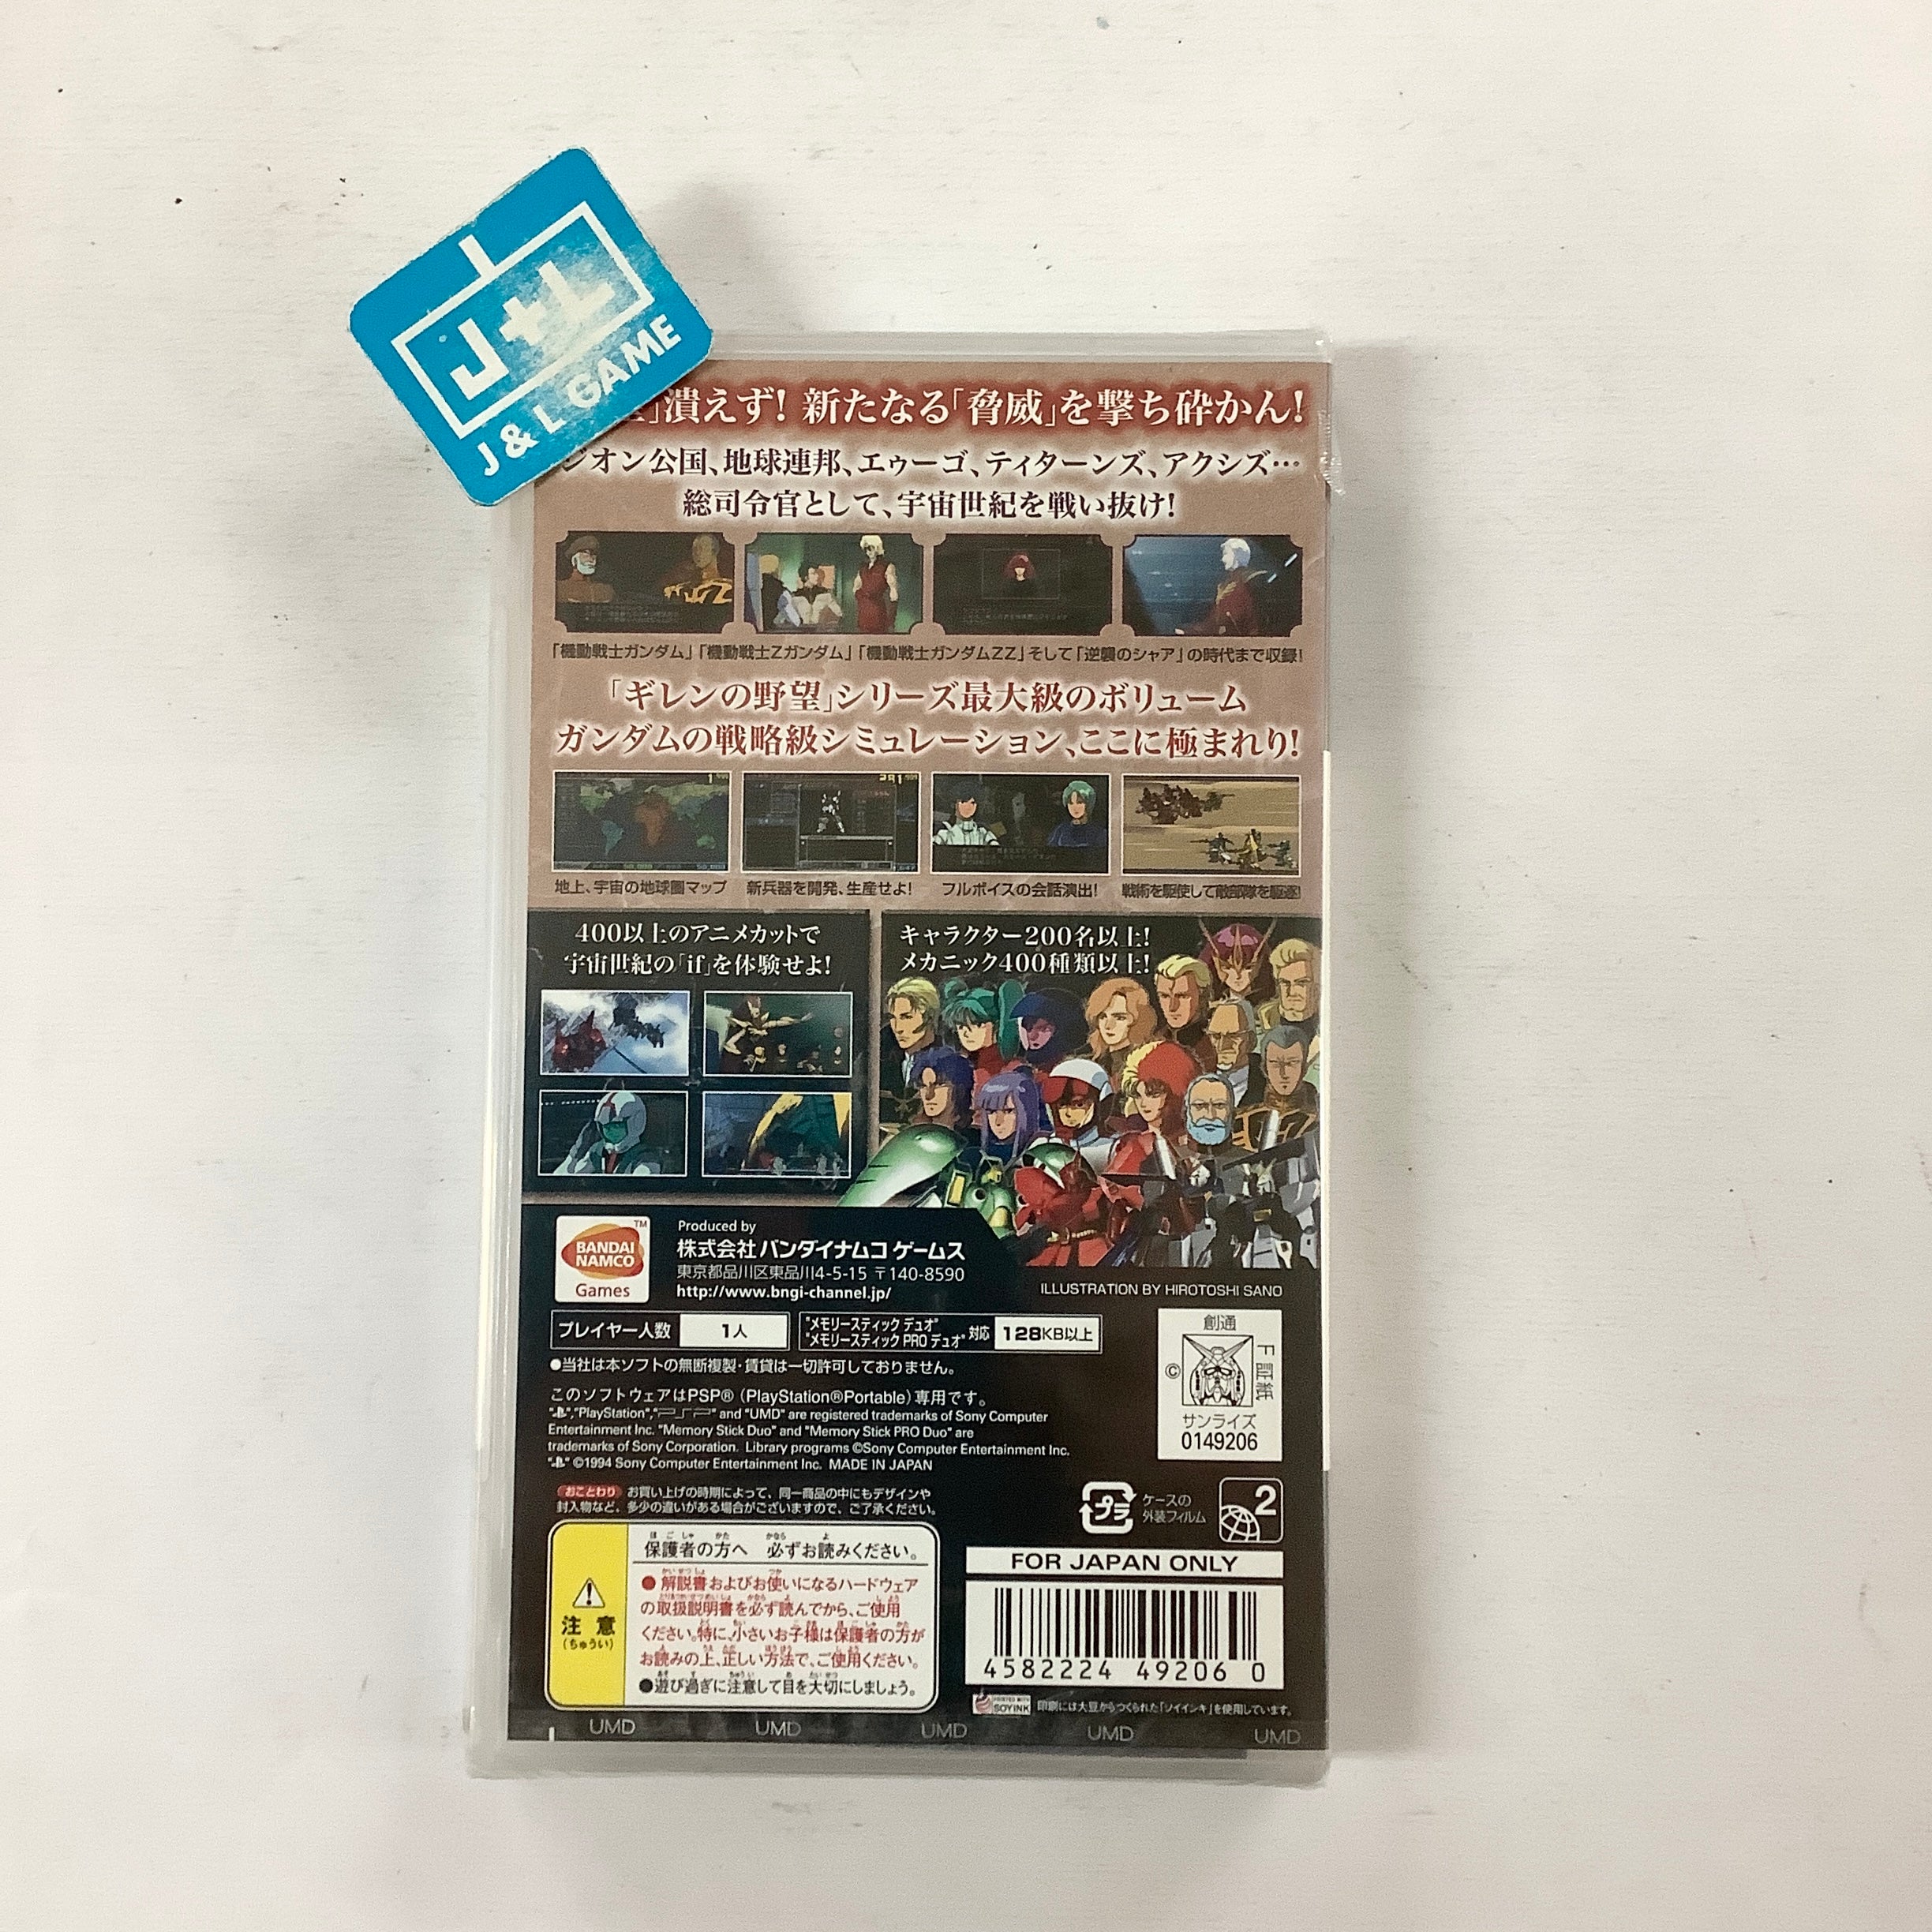 Mobile Suit Gundam: Giren no Yabou Axis no Kyoui - Sony PSP (Japanese Import) Video Games Namco Bandai Games   